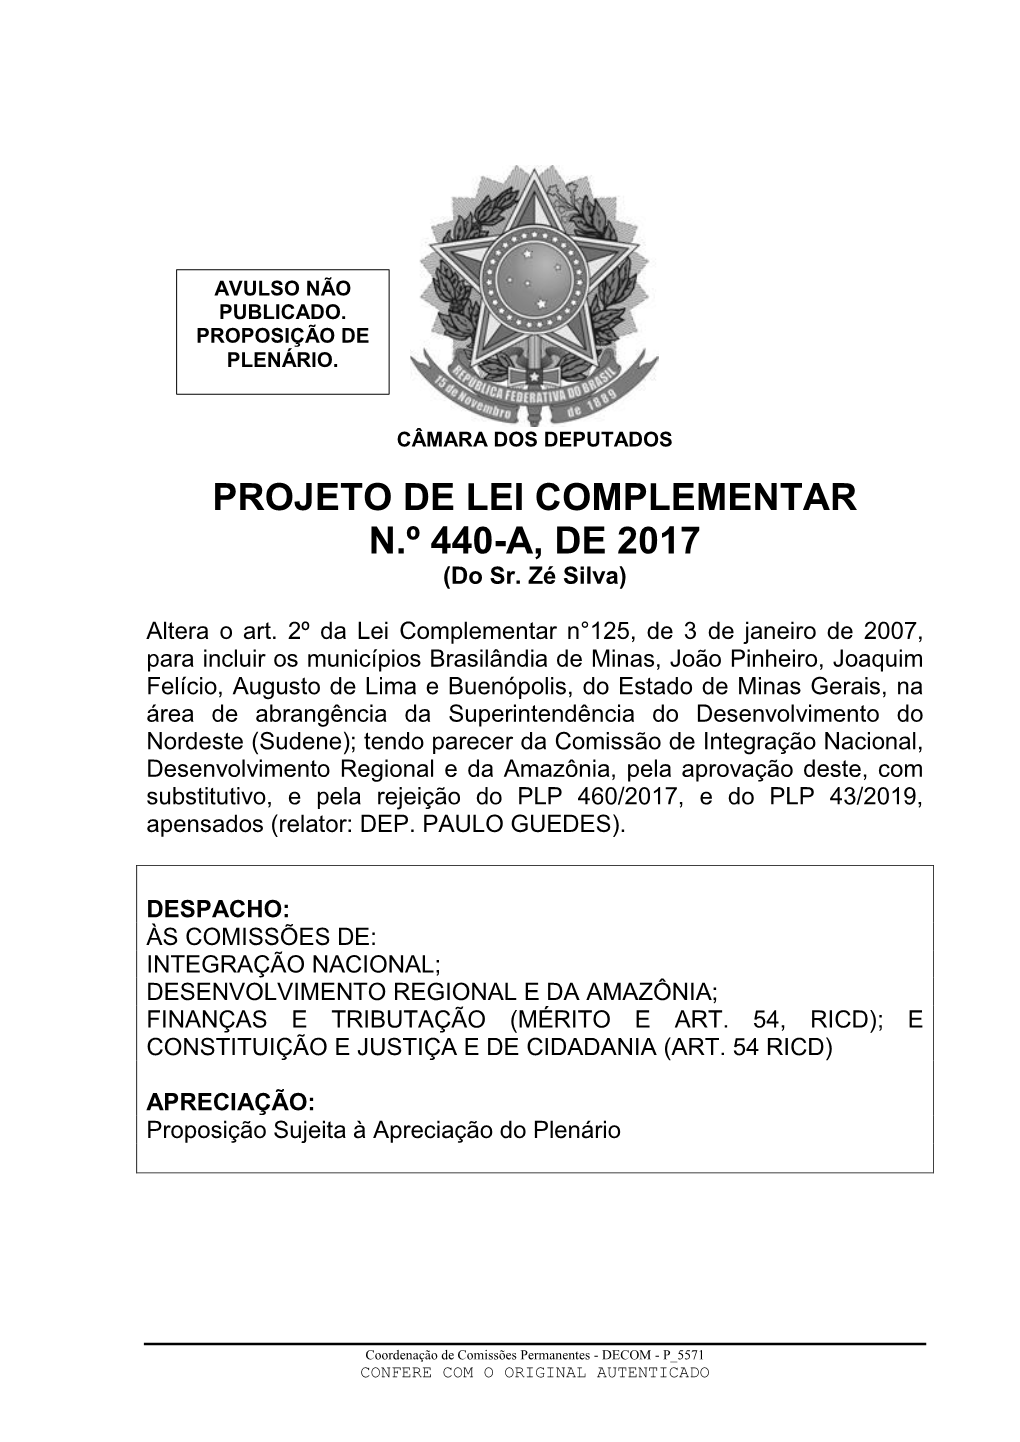 PROJETO DE LEI COMPLEMENTAR N.º 440-A, DE 2017 (Do Sr